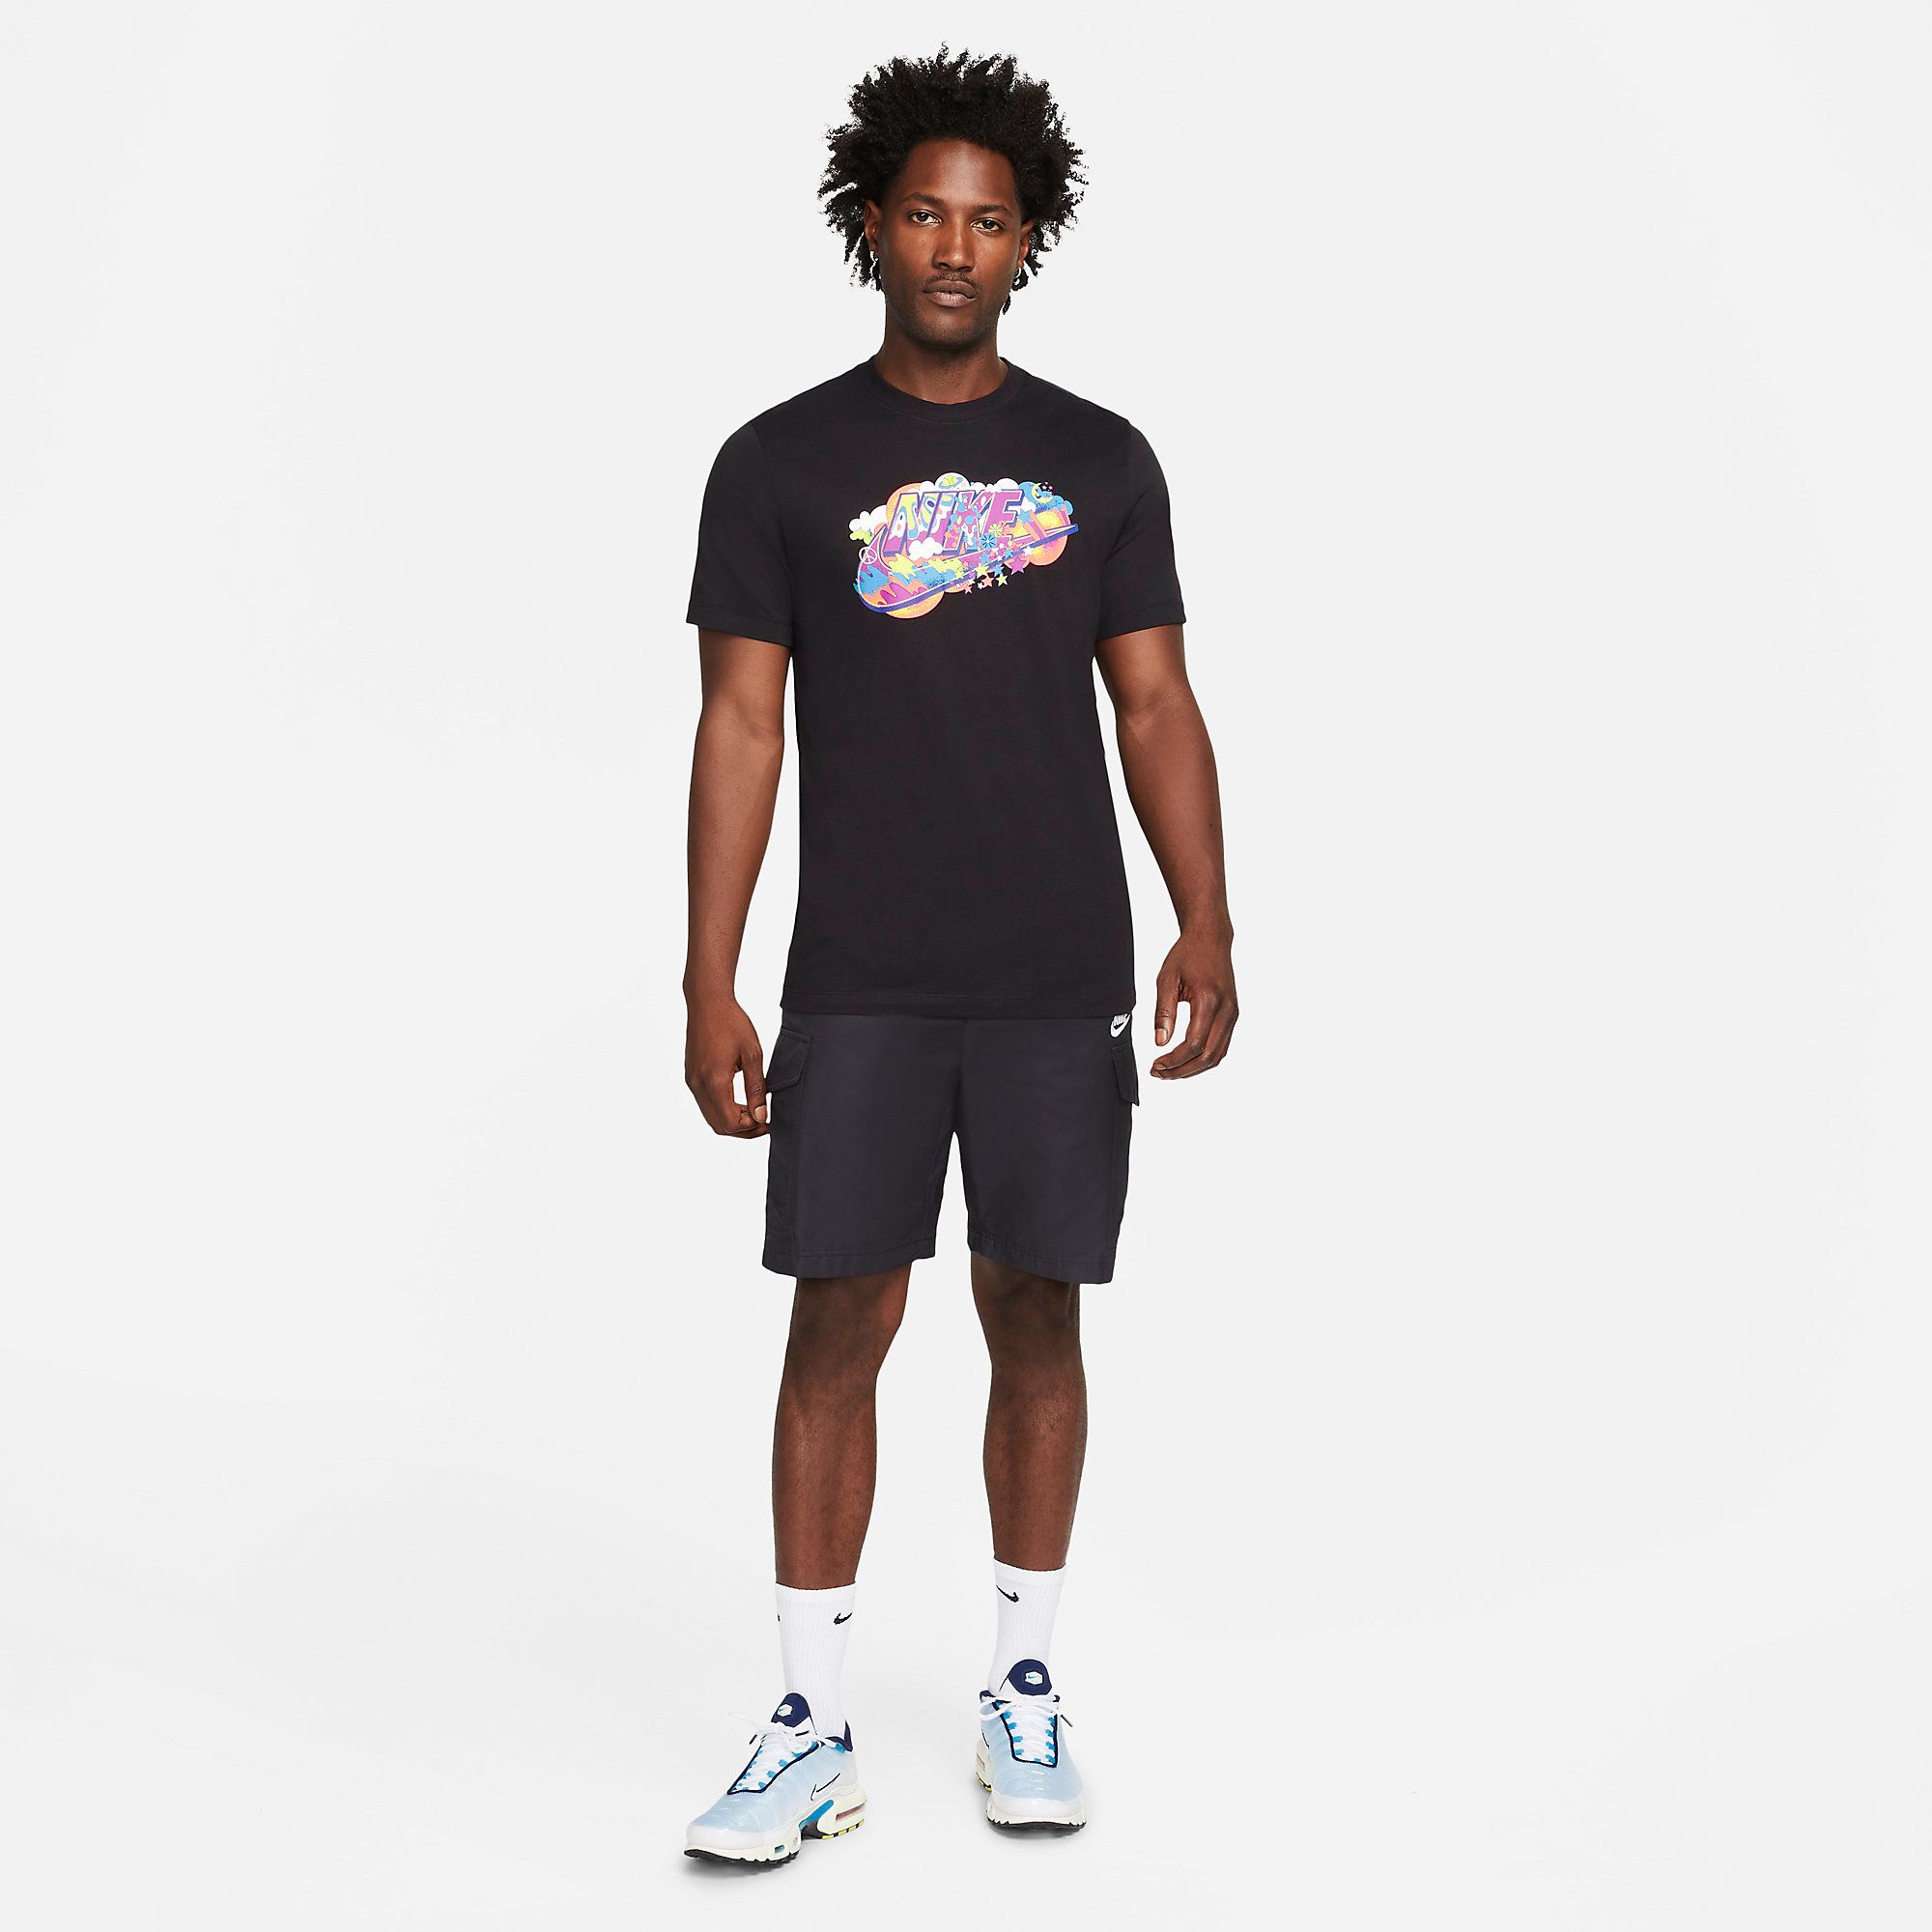  Nike Sportswear Black Light T-Shirt - Black 